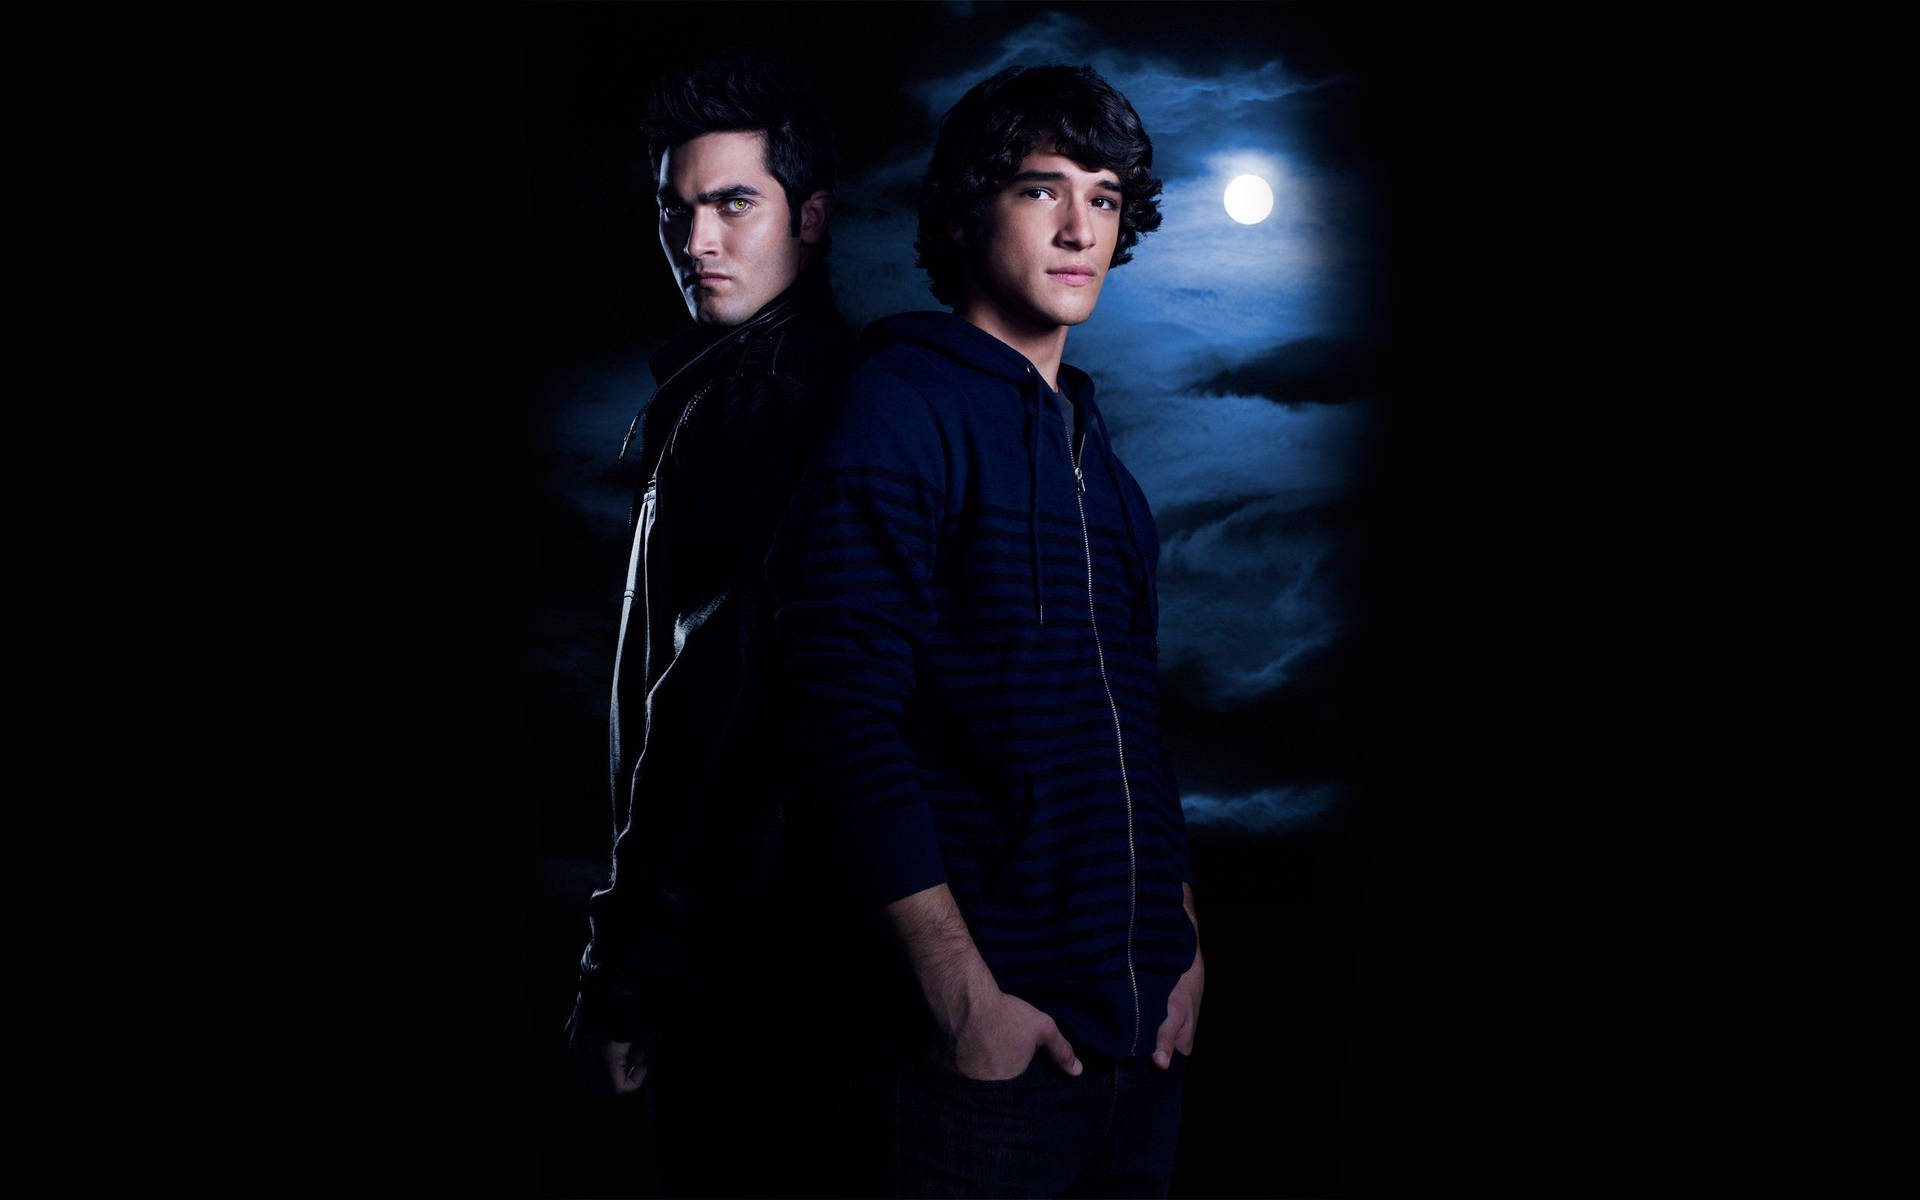 Caption: Powerful Partnership - Scott and Derek in Teen Wolf Wallpaper